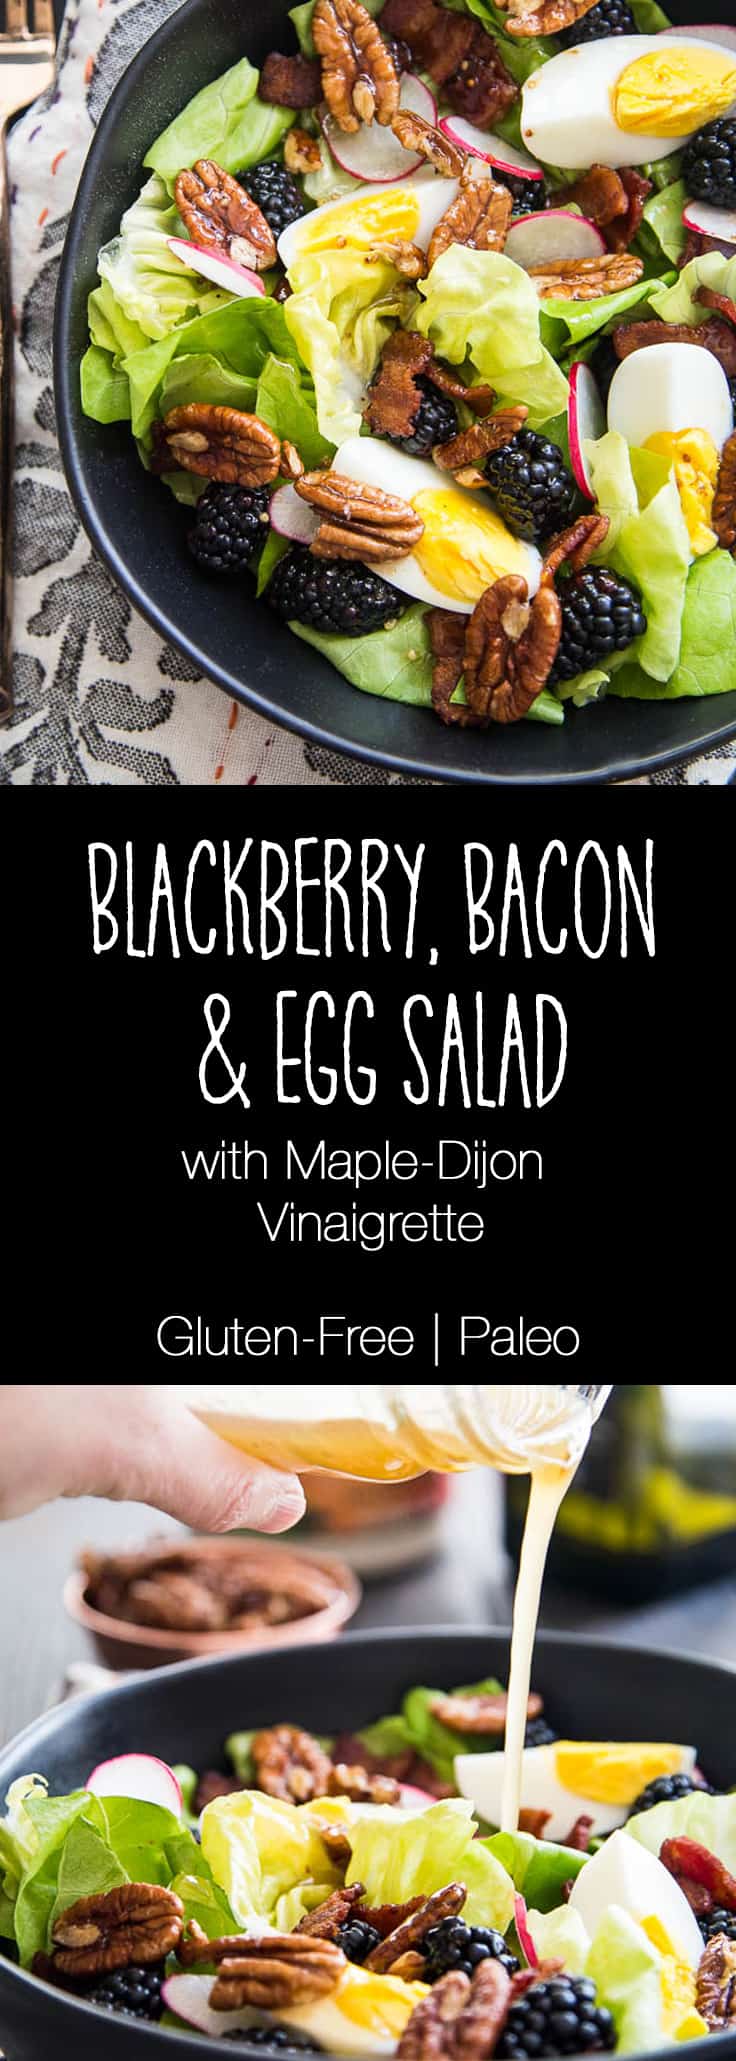 Blackberry, Bacon, & Egg Salad with Maple Dijon Vinaigrette | quick salad recipes | gluten-free recipes | perrysplate.com